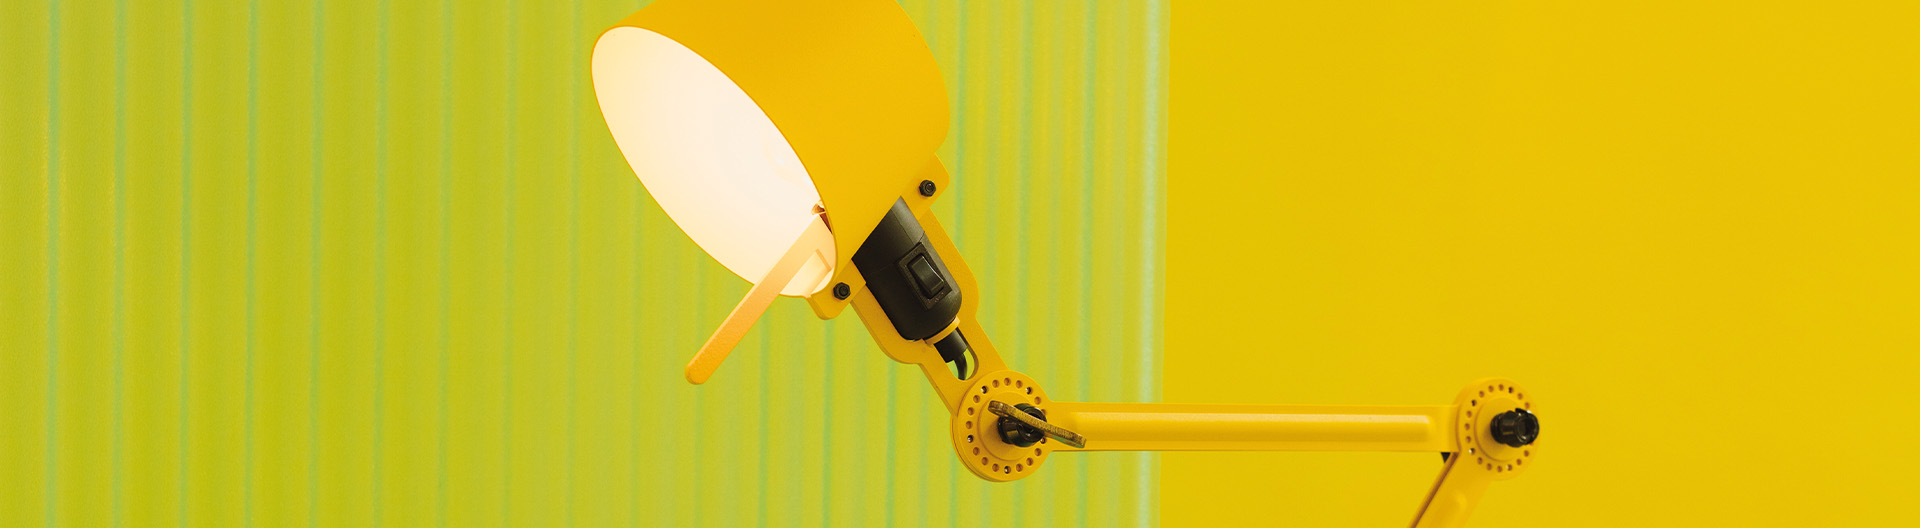 Design lamps yellow